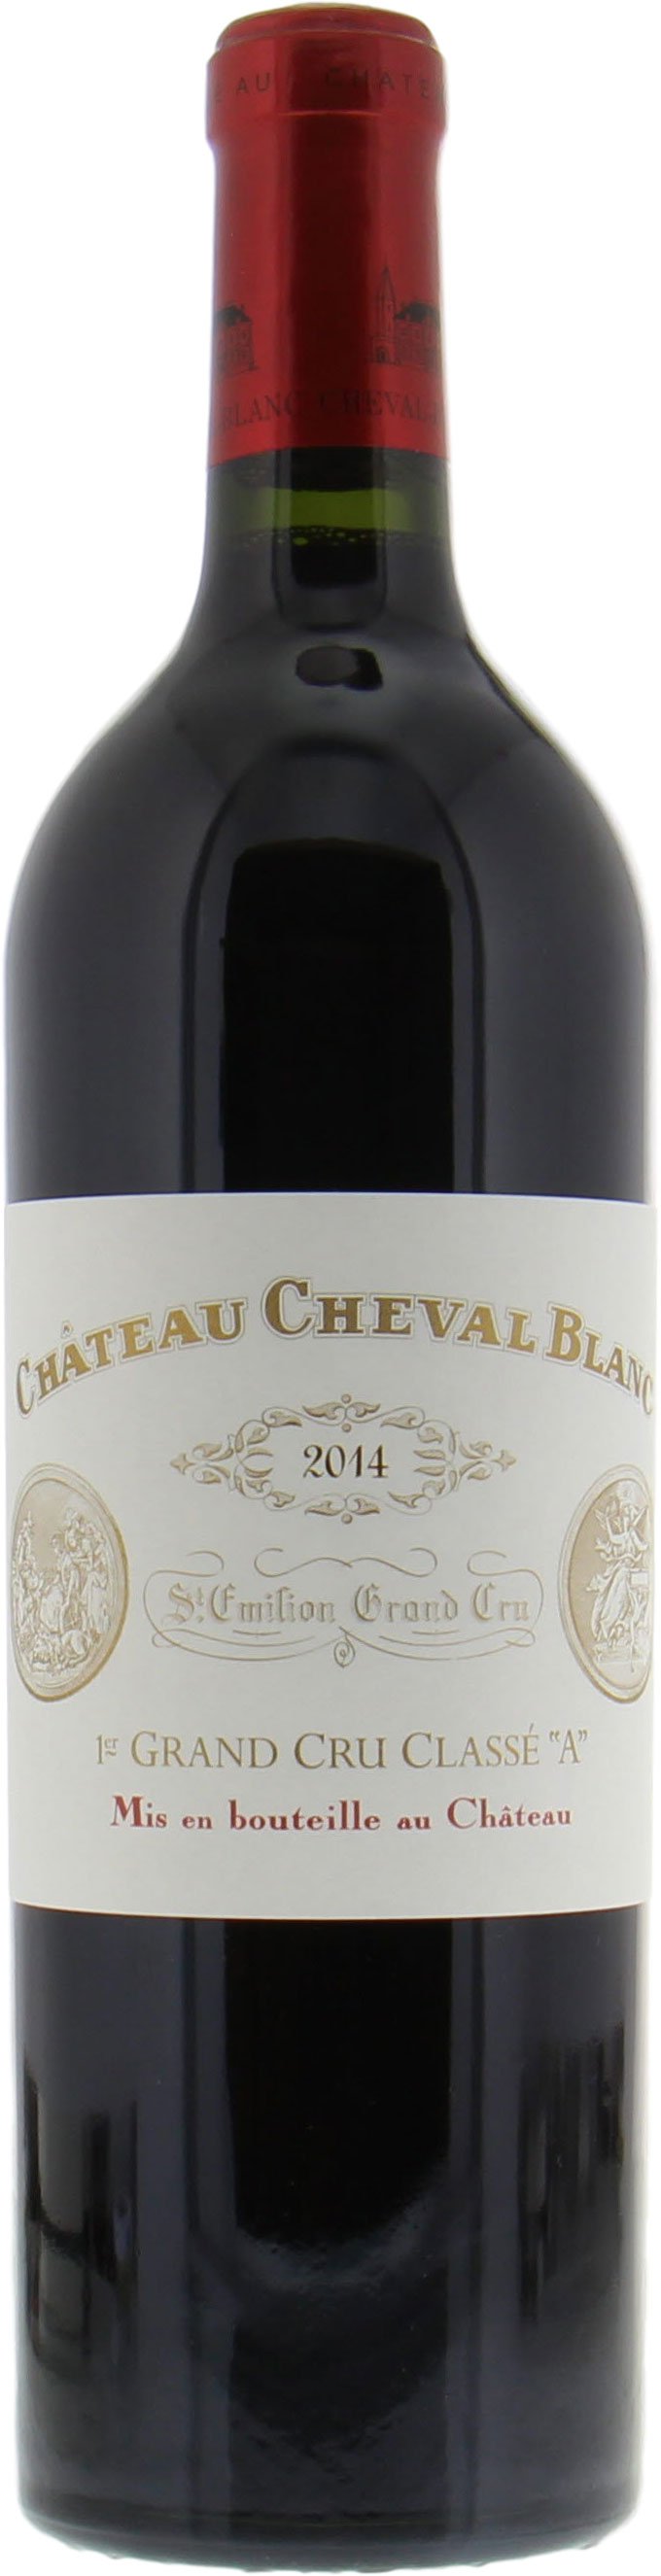 Chateau Cheval Blanc - Chateau Cheval Blanc 2014 Perfect